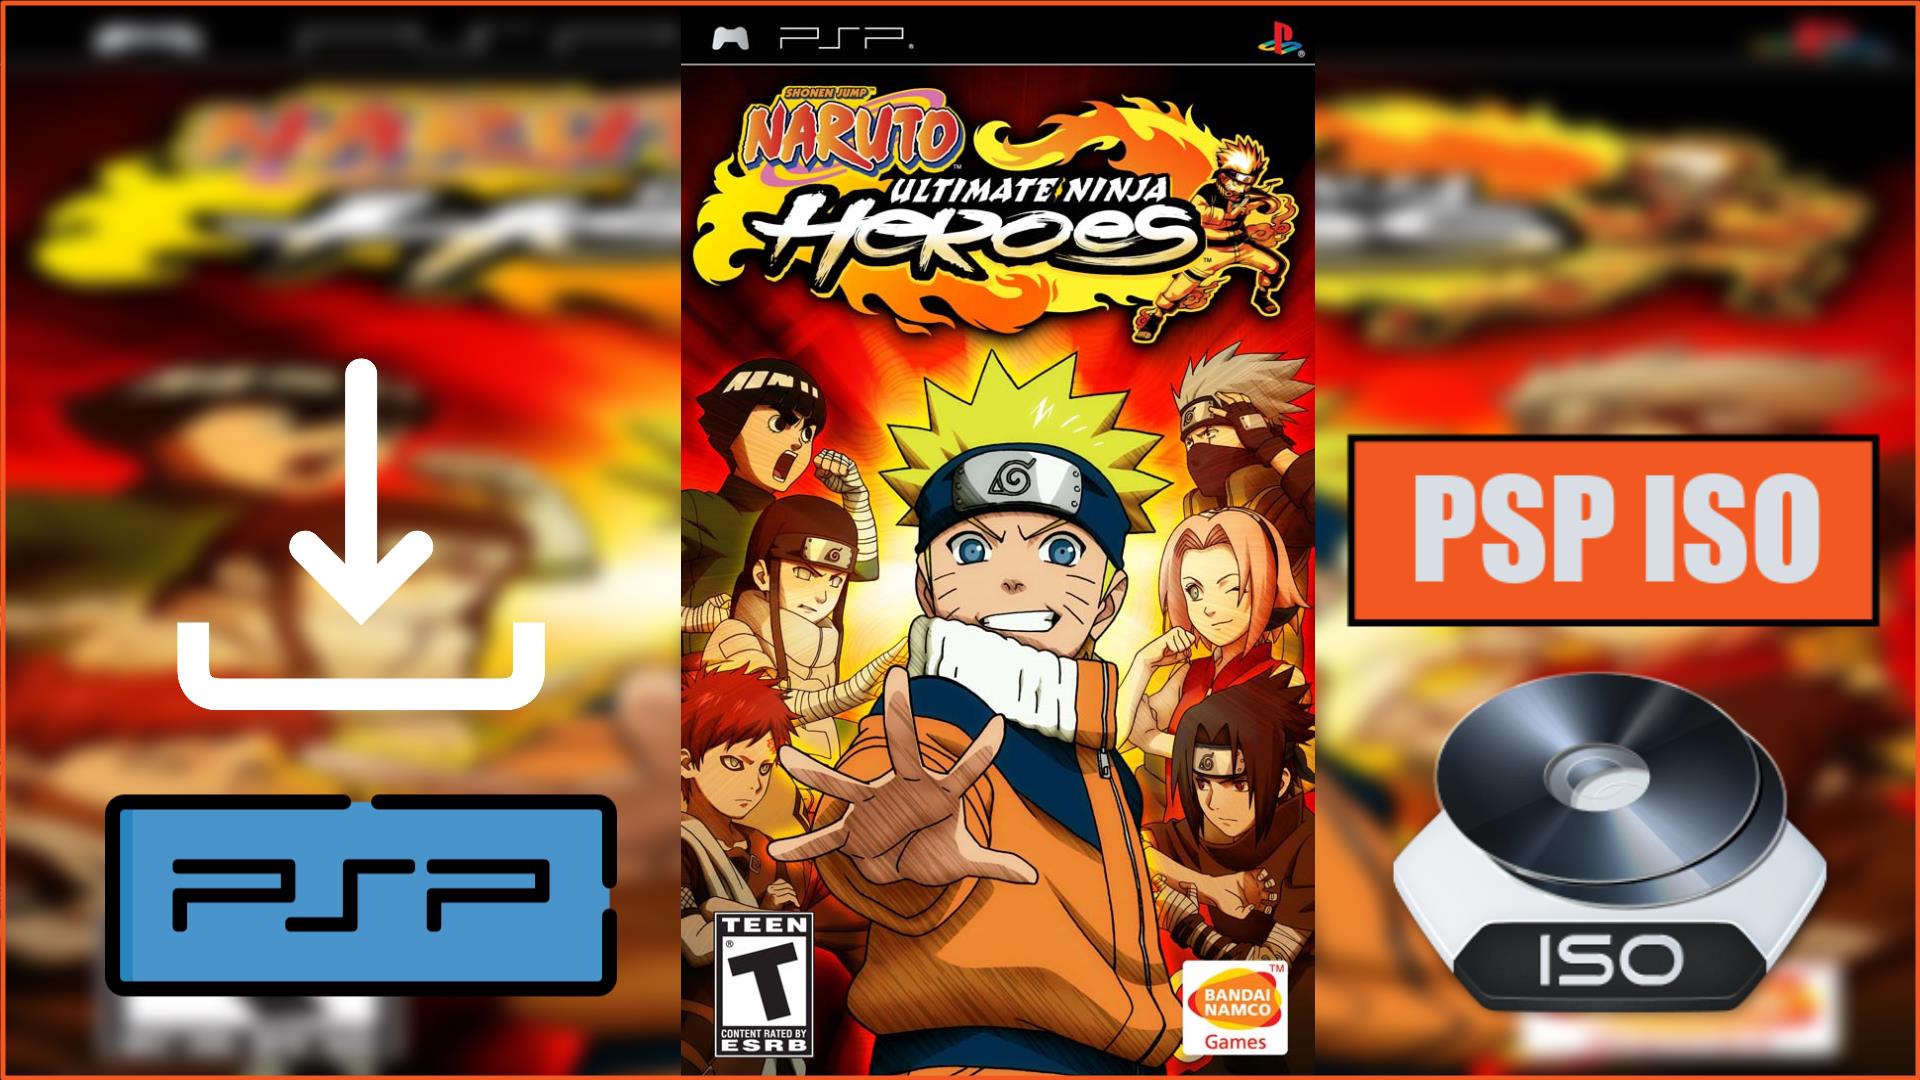 Naruto Ultimate Ninja Heroes PSP ISO Download